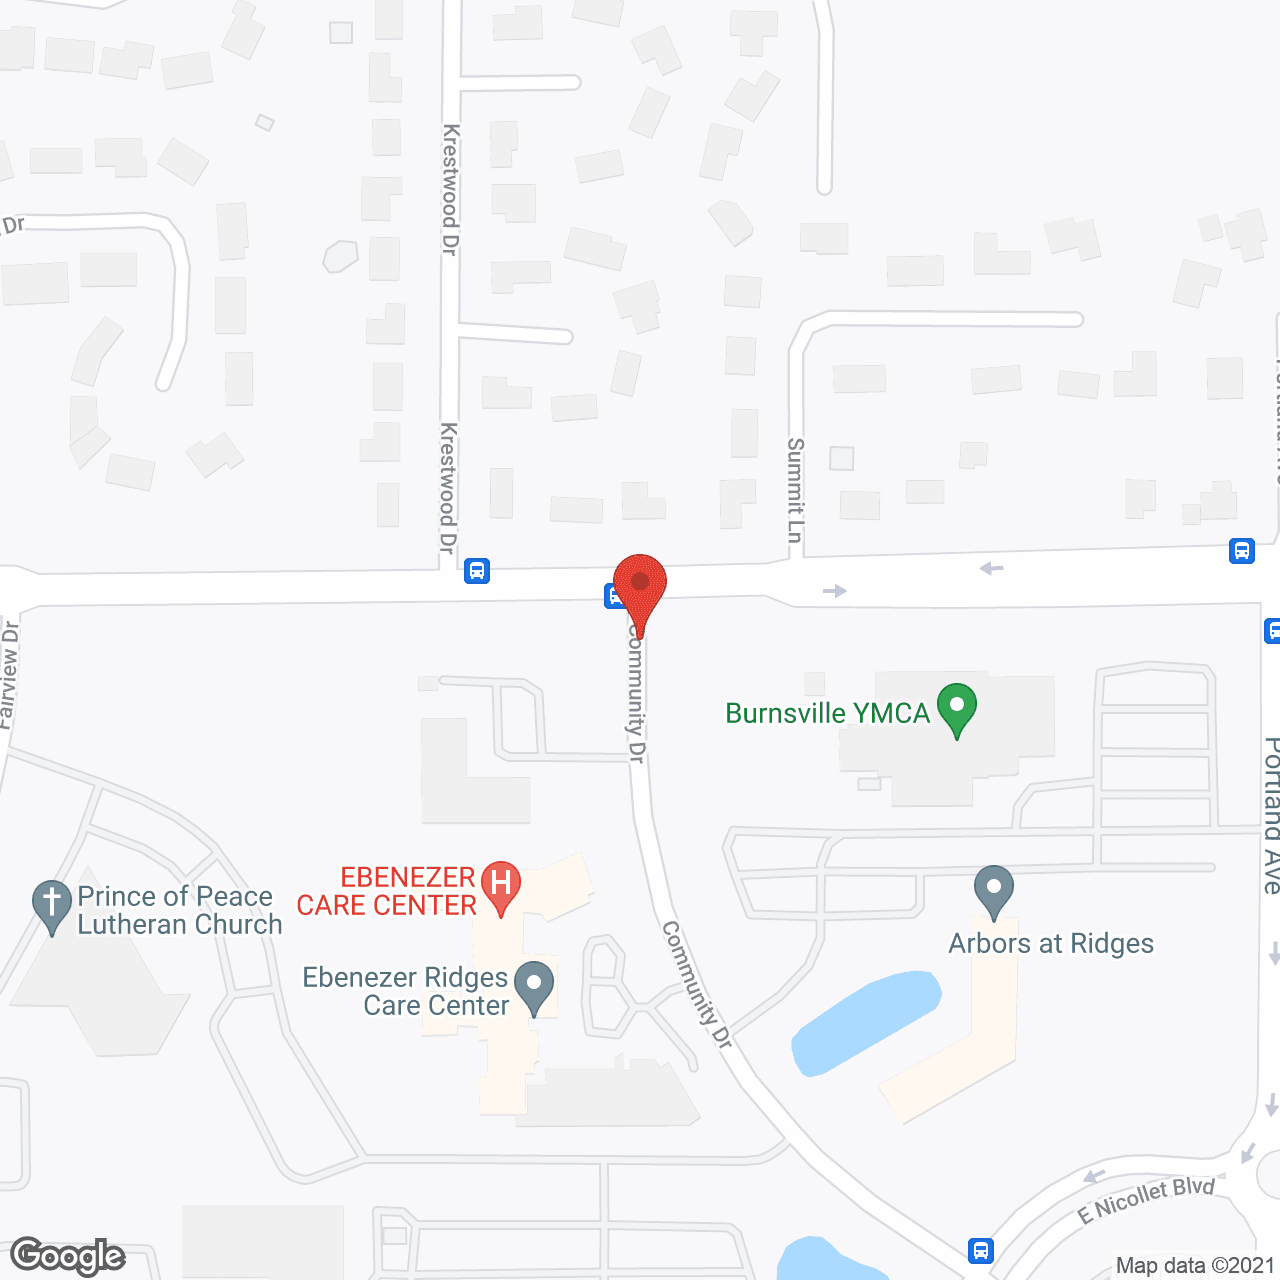 Ebenezer Ridges Campus in google map